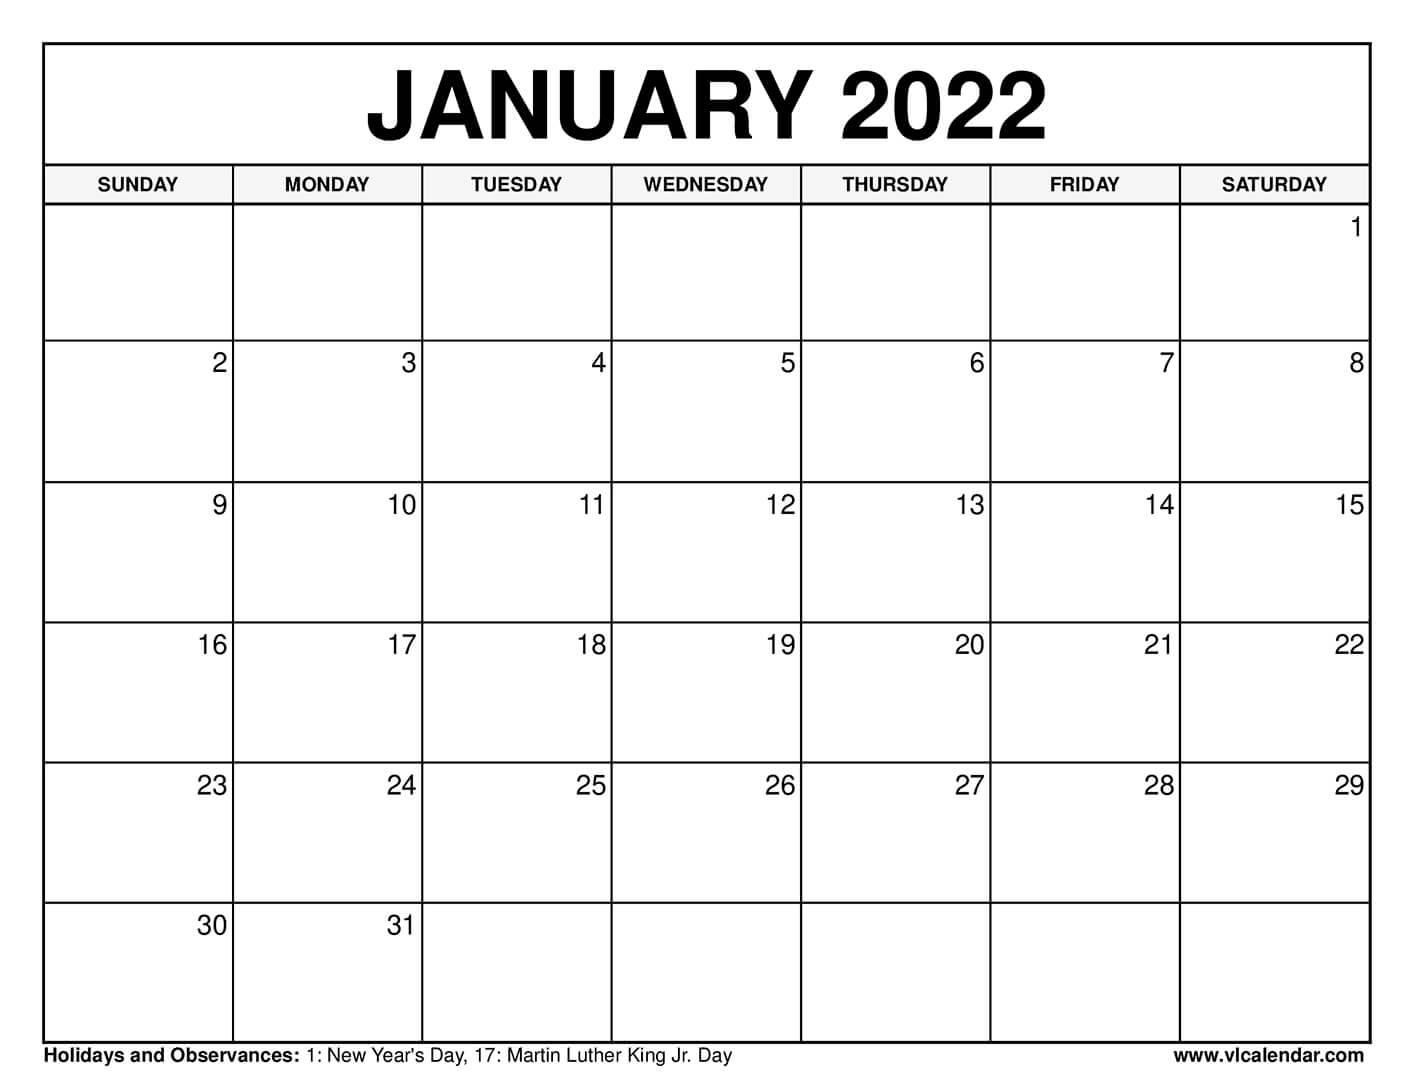 Free Calendar January 2022 Printable January 2022 Calendar Templates With Holidays - Vl Calendar